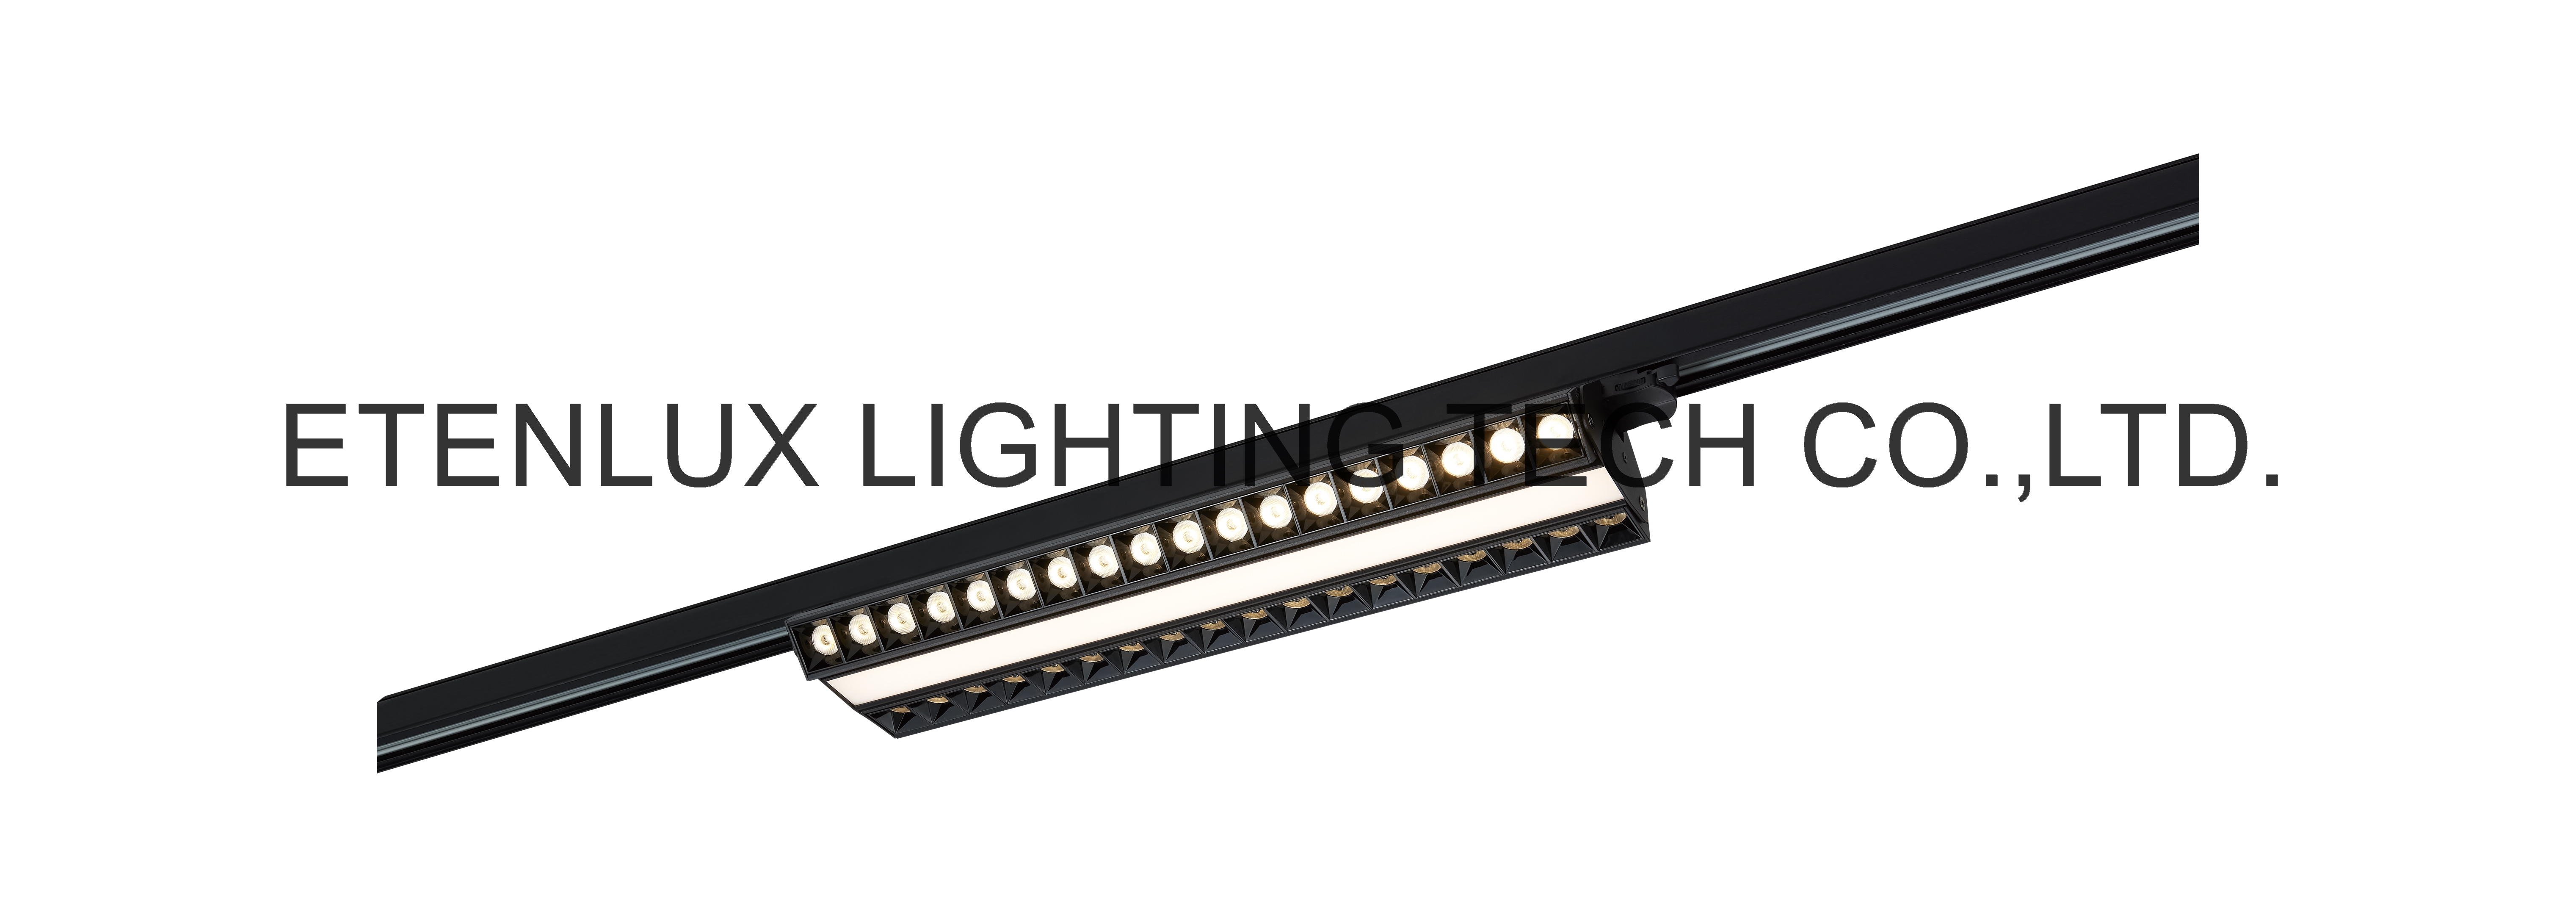 LED Linear Track Light